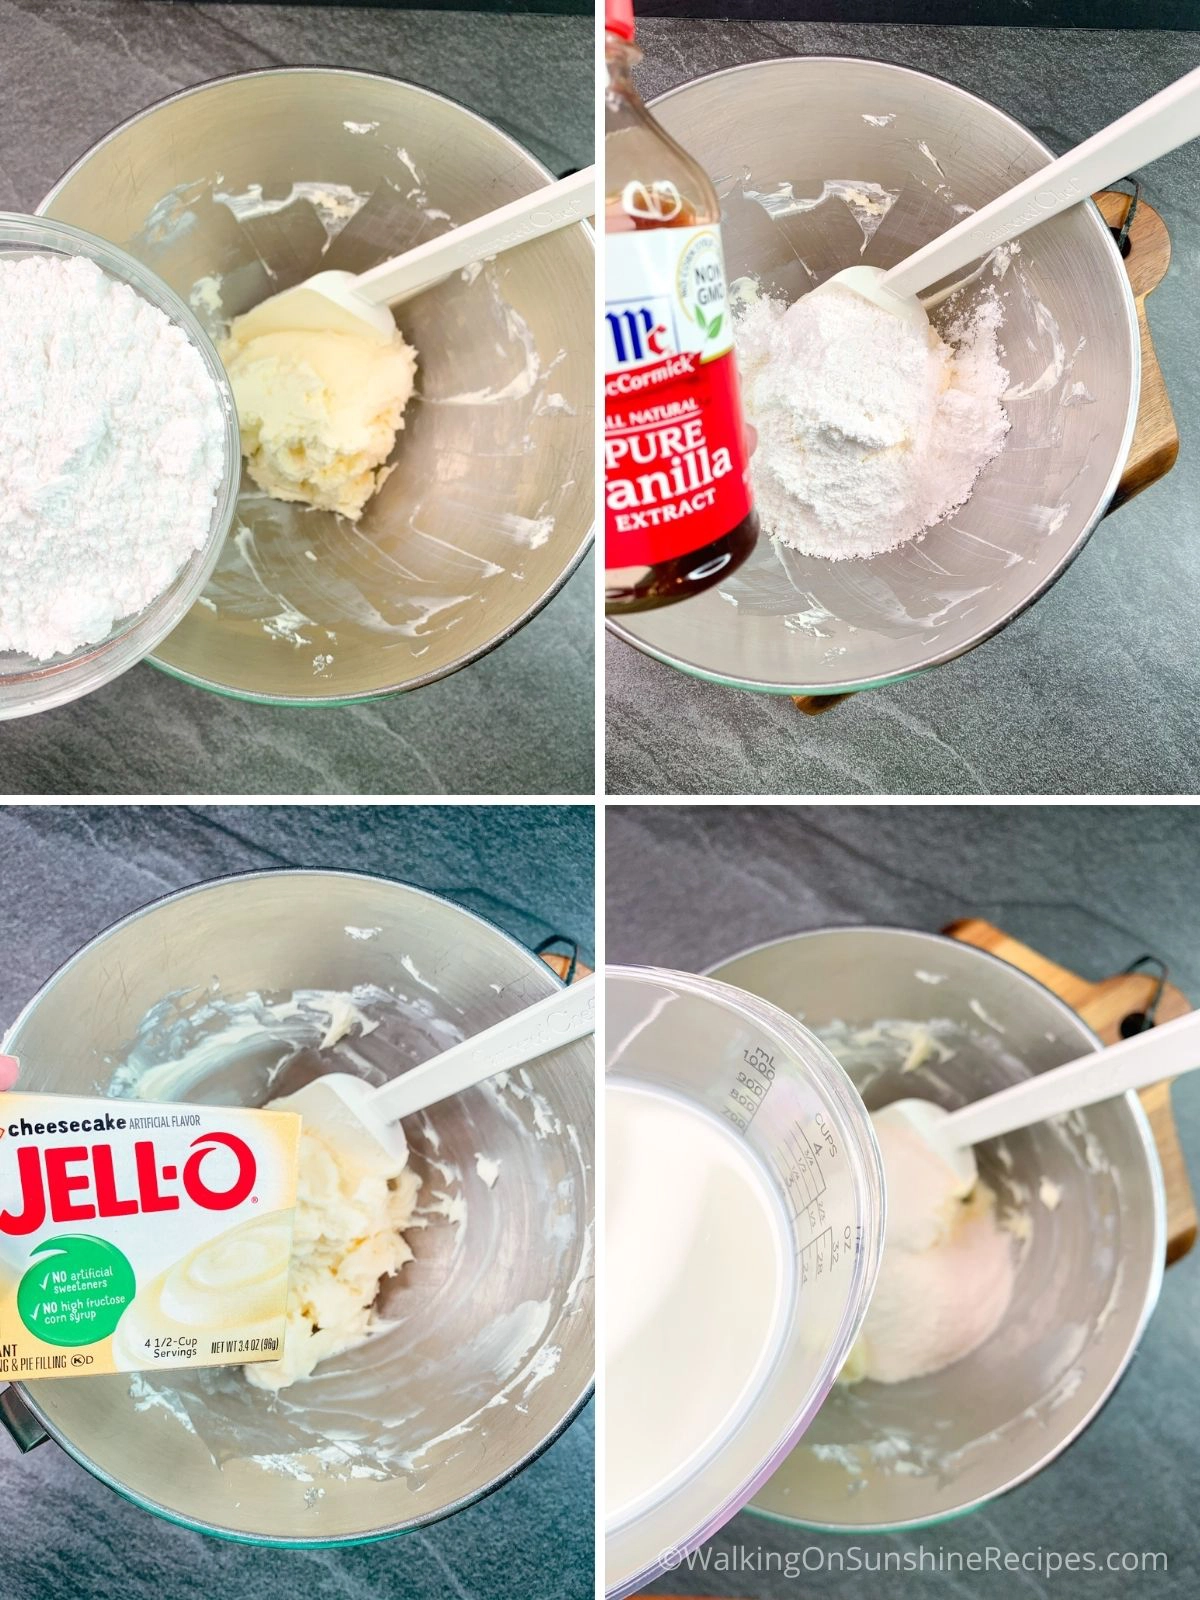 Adding pudding mix to cheesecake.